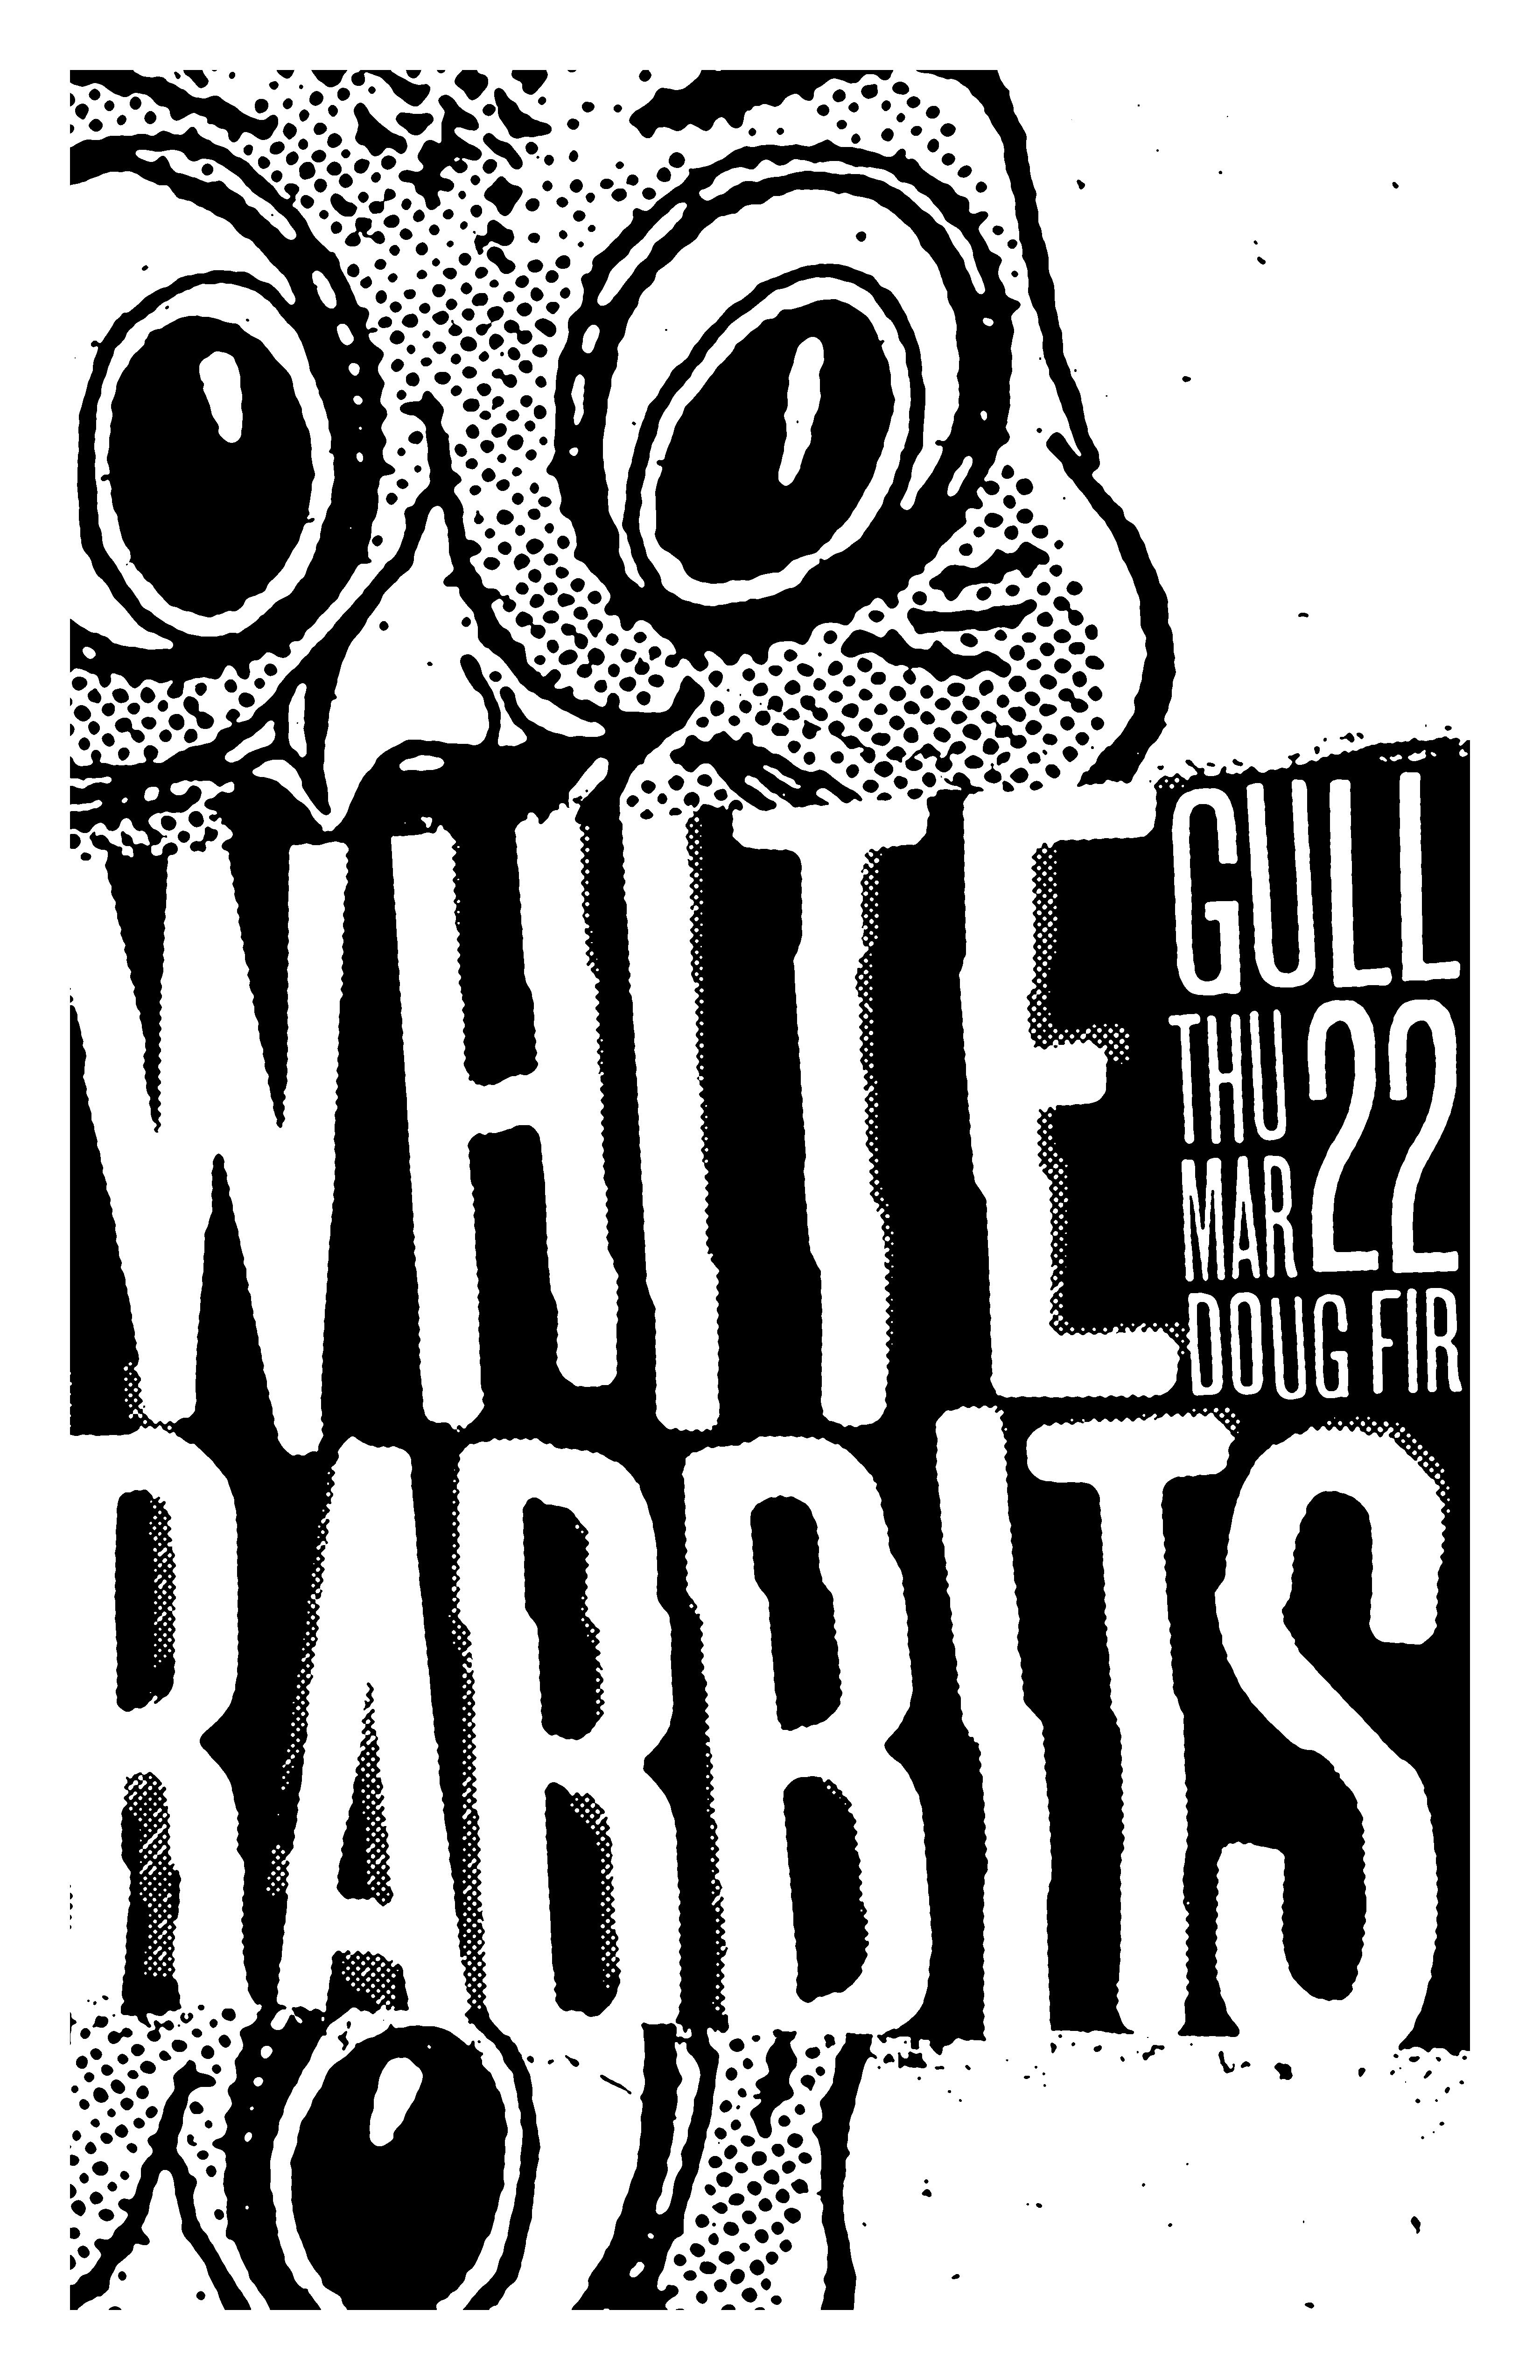 MXP-141.2 White Rabbits Doug Fir 2012 Concert Poster